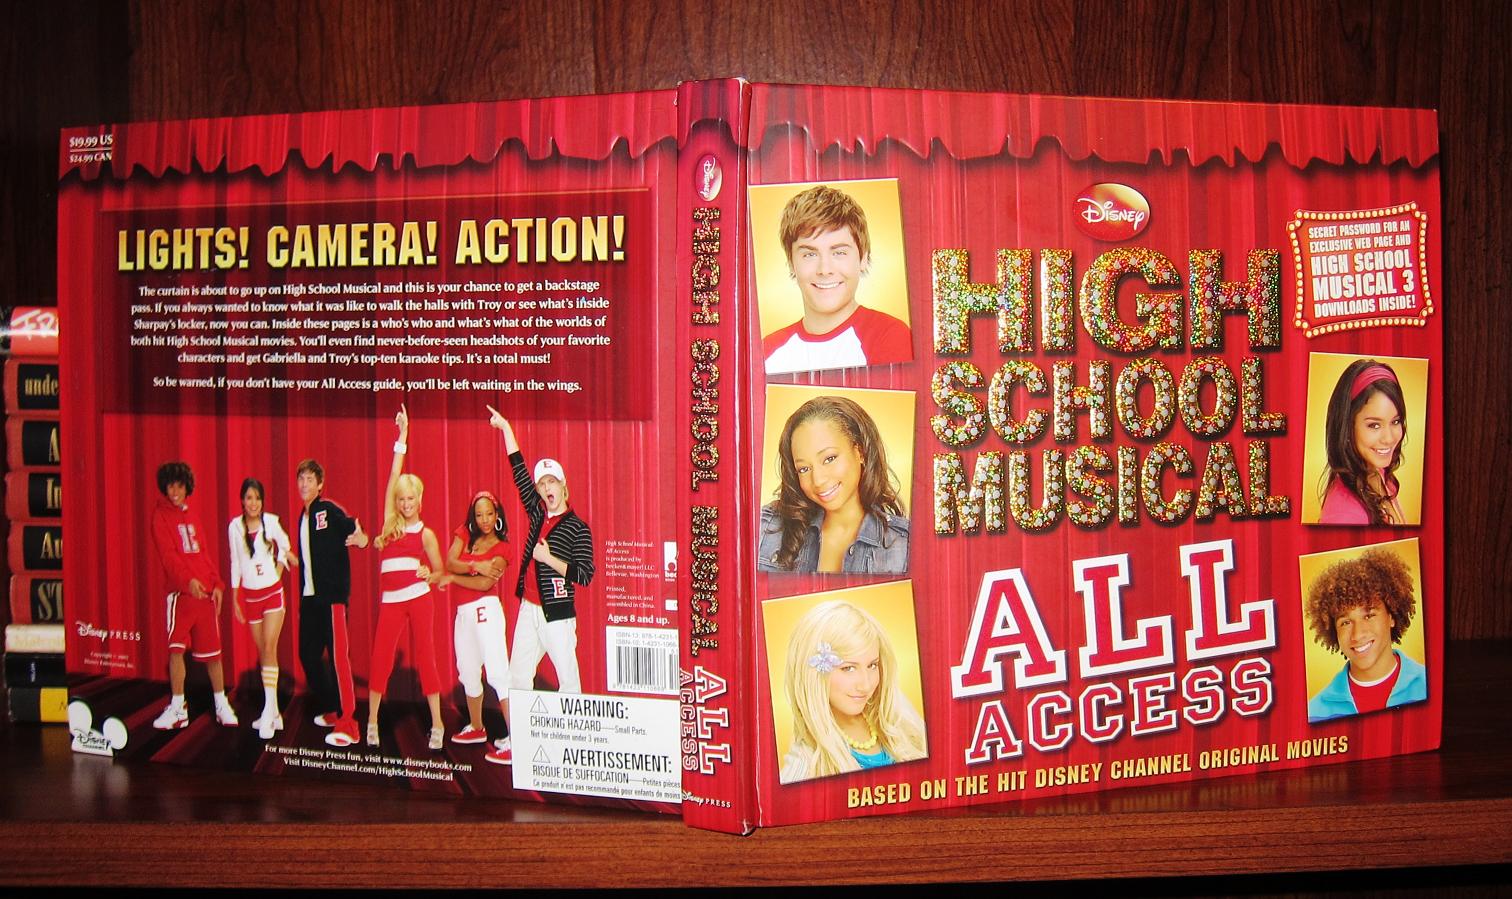 High School Musical All Access Hardcover Book. Disney Press 9781423110668